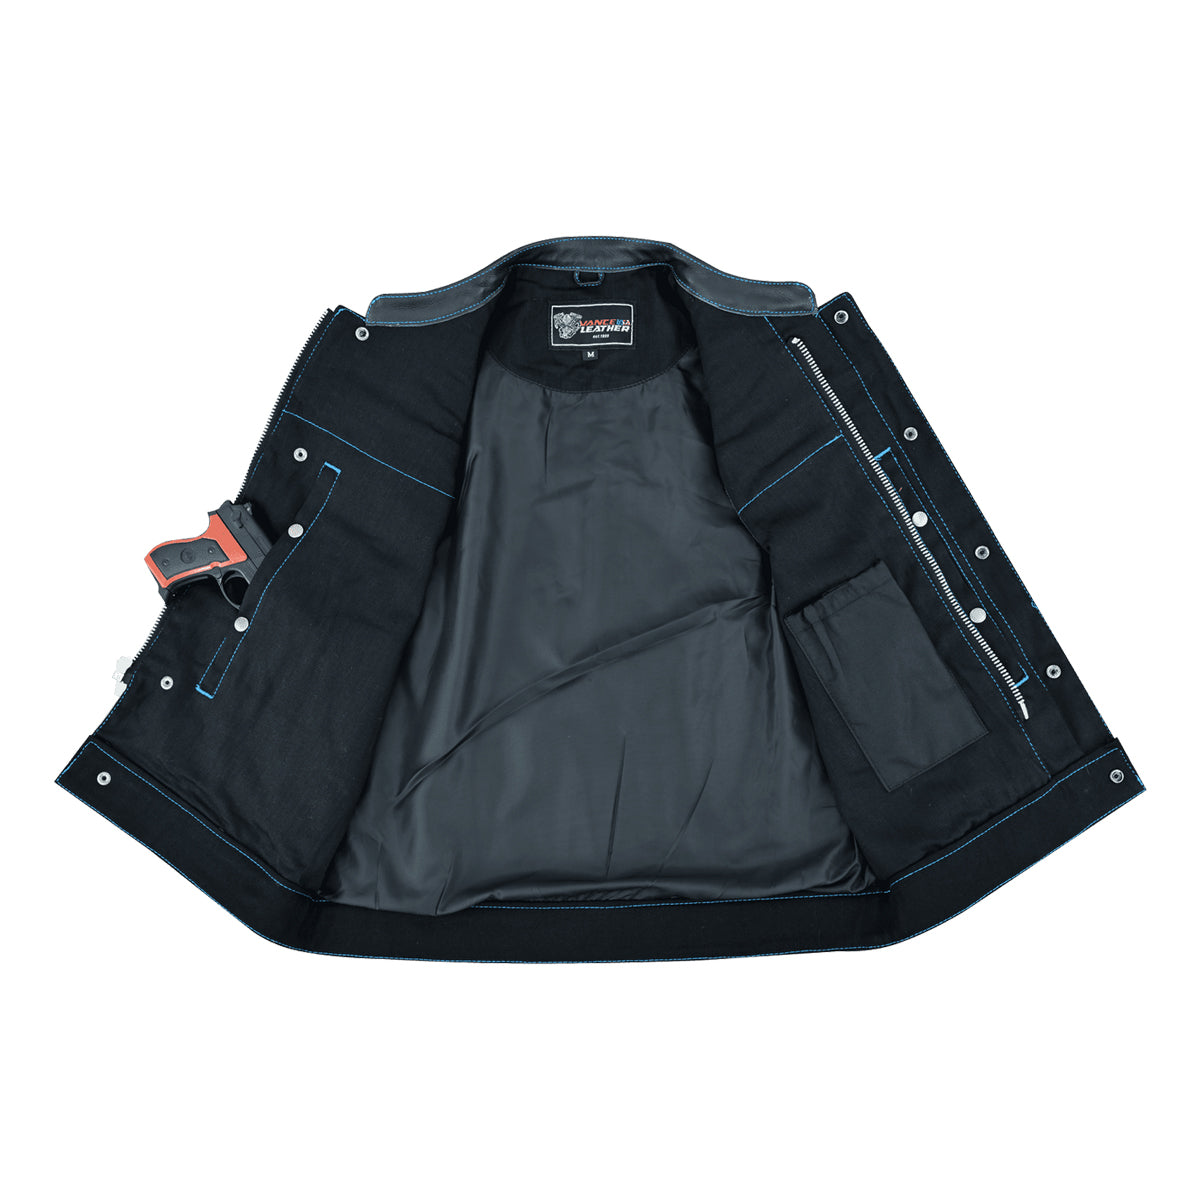 Men's Denim & Leather Motorcycle Vest with Conceal Carry Pockets, SOA Biker Club Vest Blue Stitching, Diamond Padding, Snap & Zipper Closure